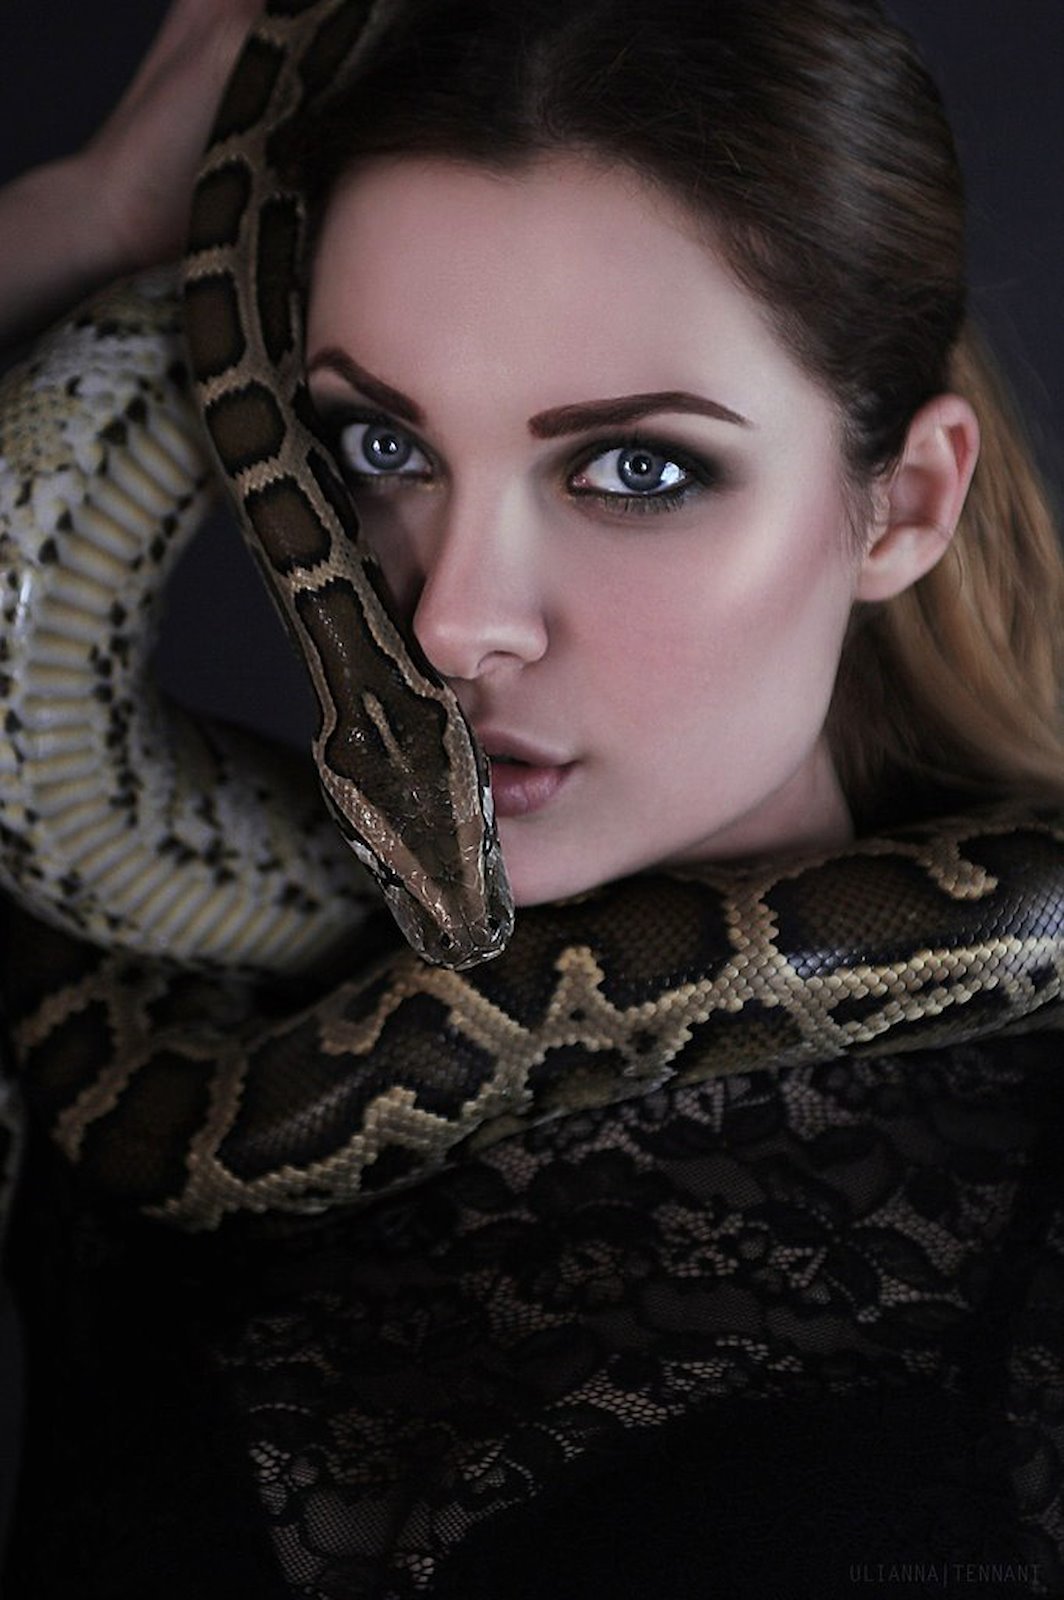 Девочка змейка. Девушка змея. Девушка со змеями. Фотосессия со змеями. Макияж змеи.